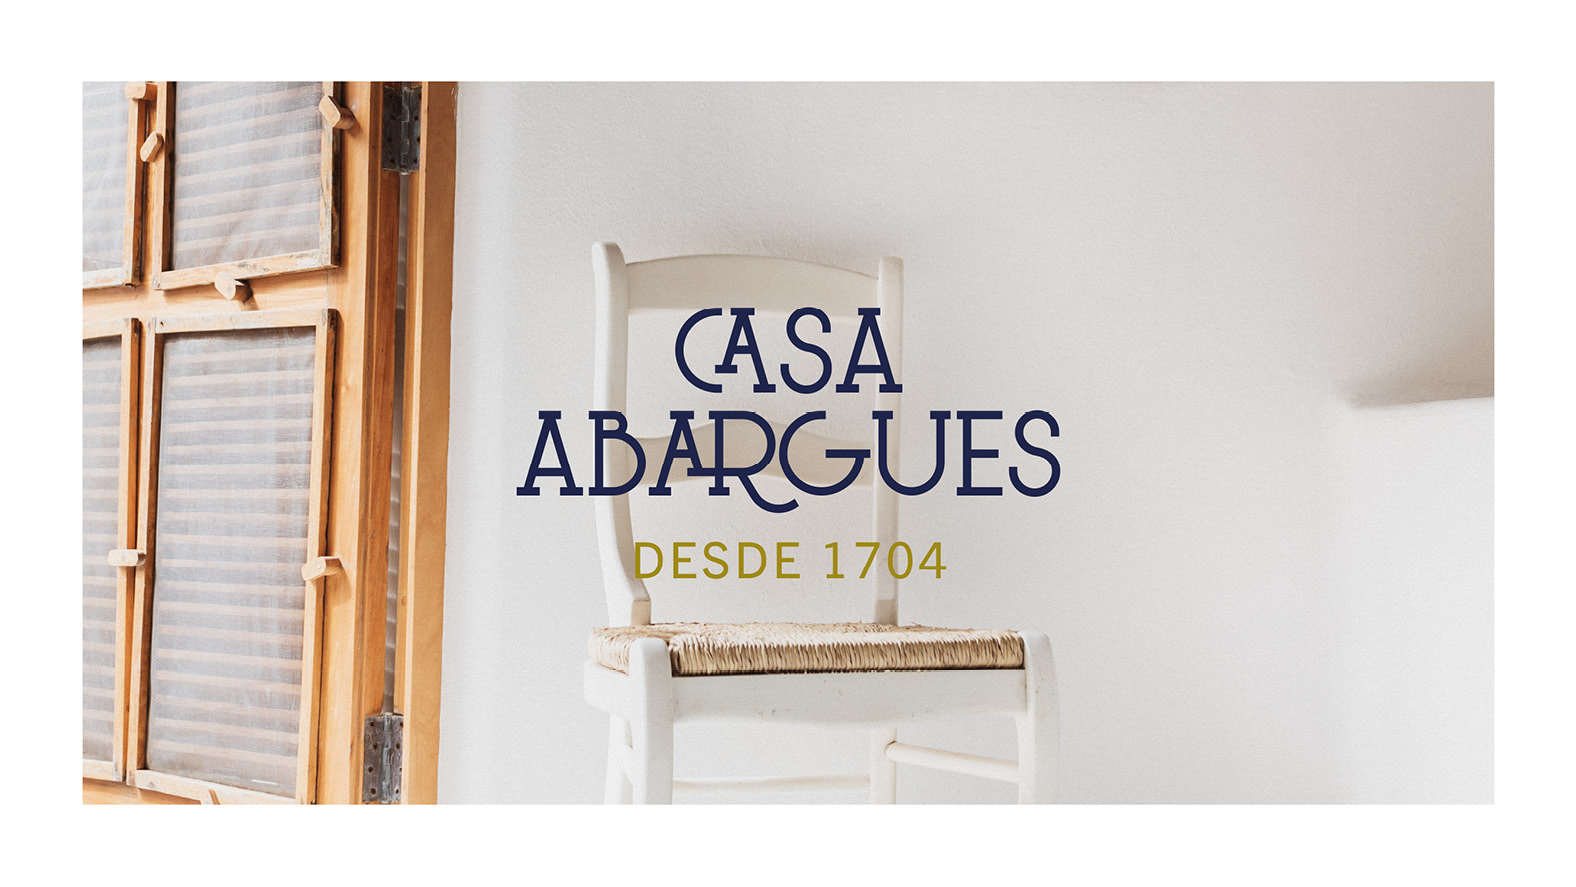 Aceite de Oliva Virgen Extra Premium Casa Abargues by Carla Gil Adrover - Creative Work